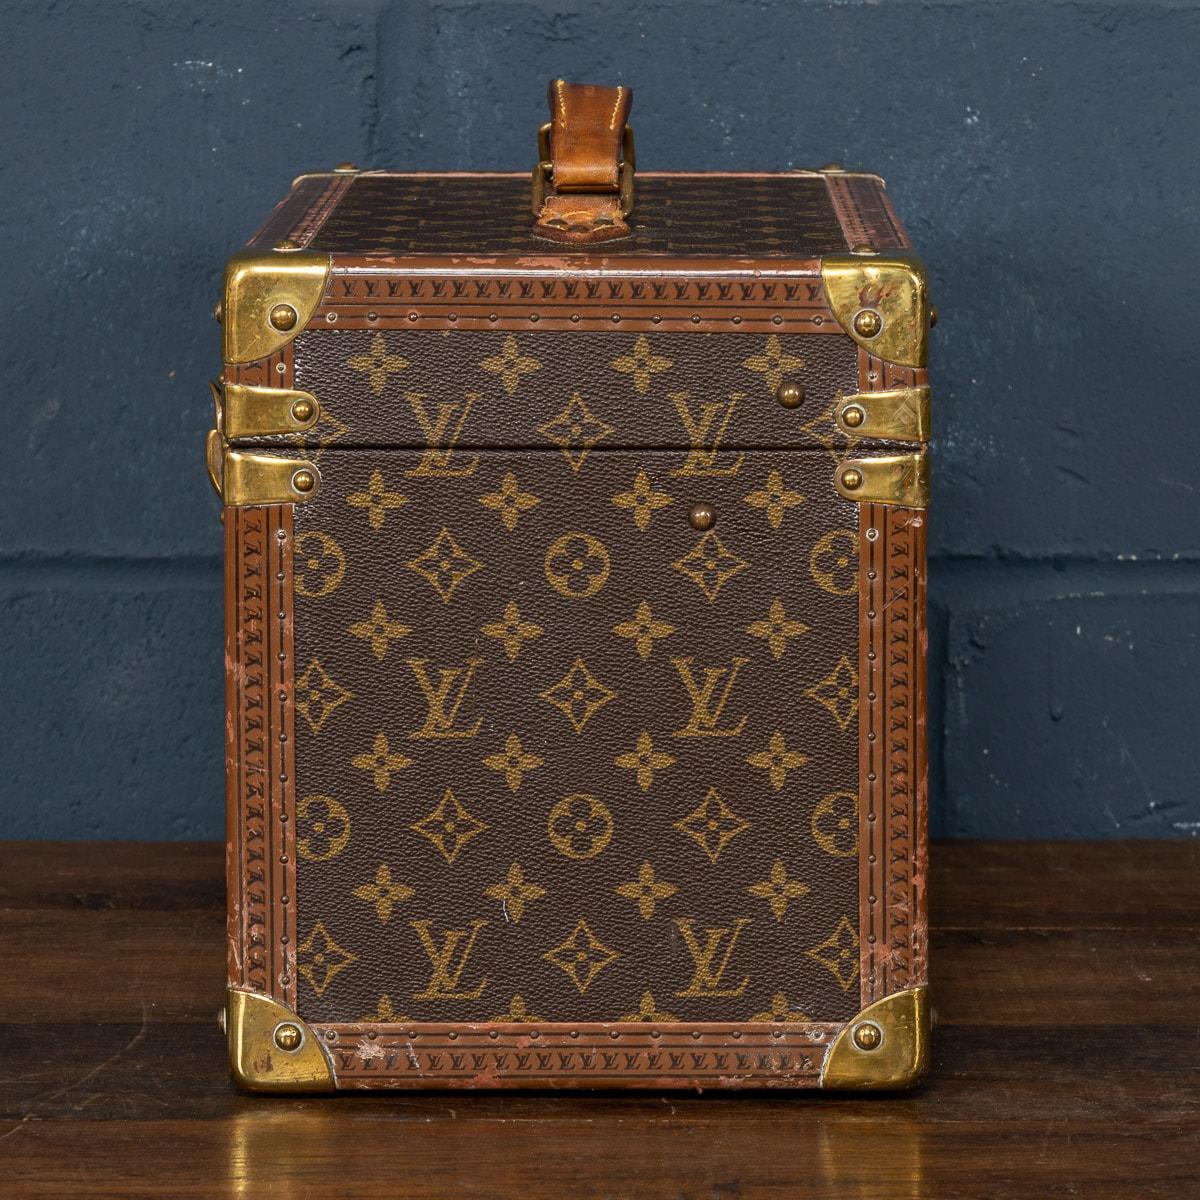 lv vanity case bag